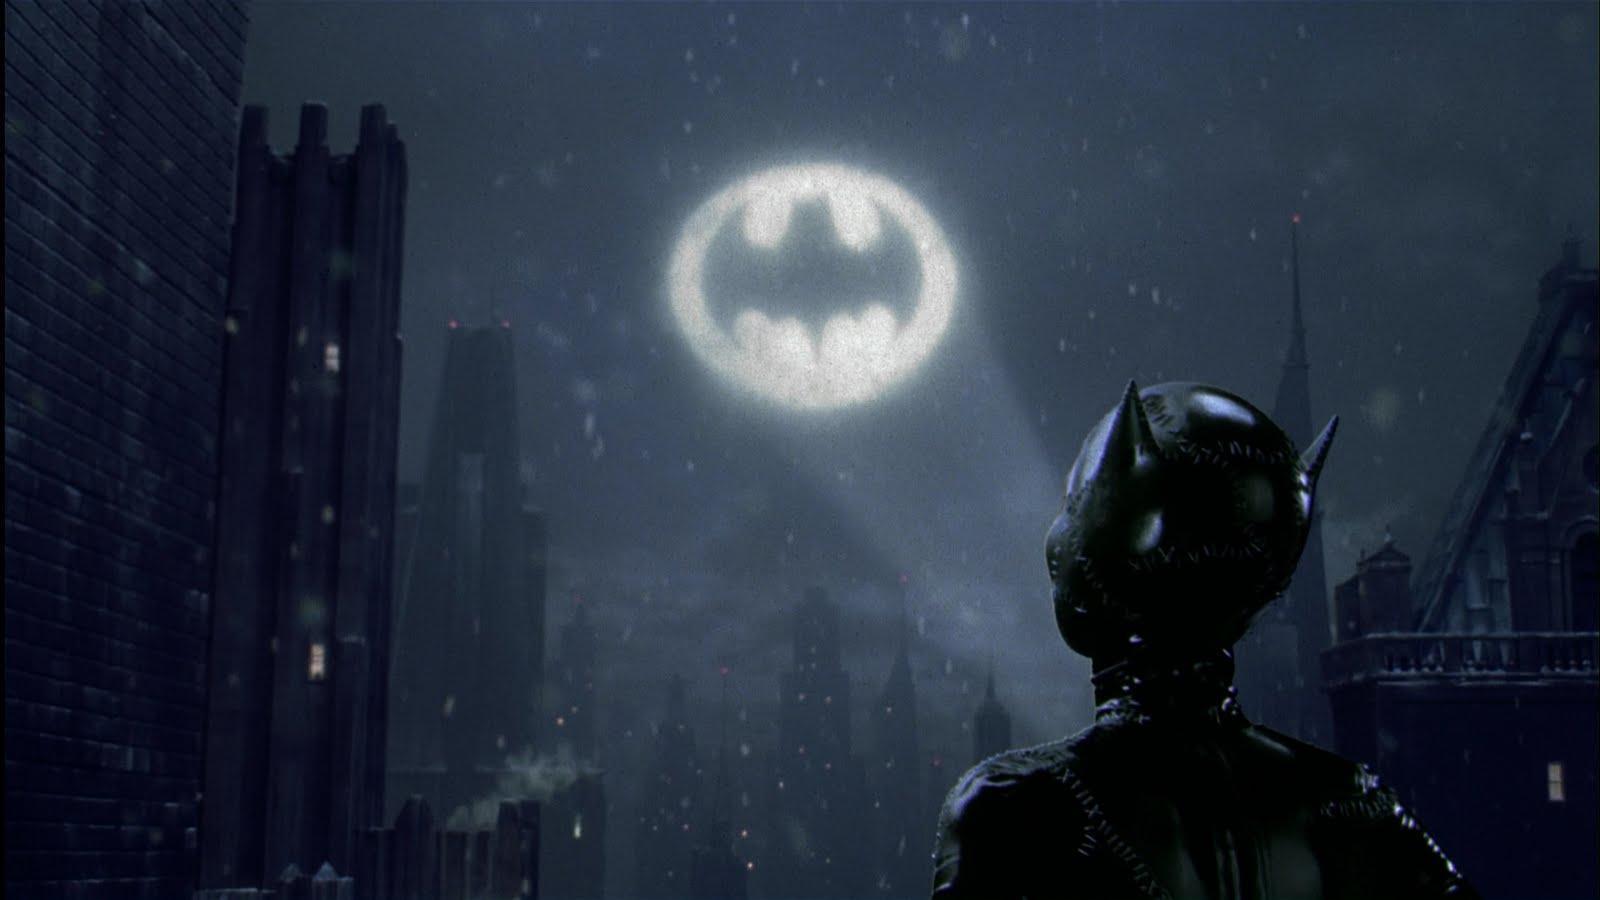 image For > Gotham City Bat Signal